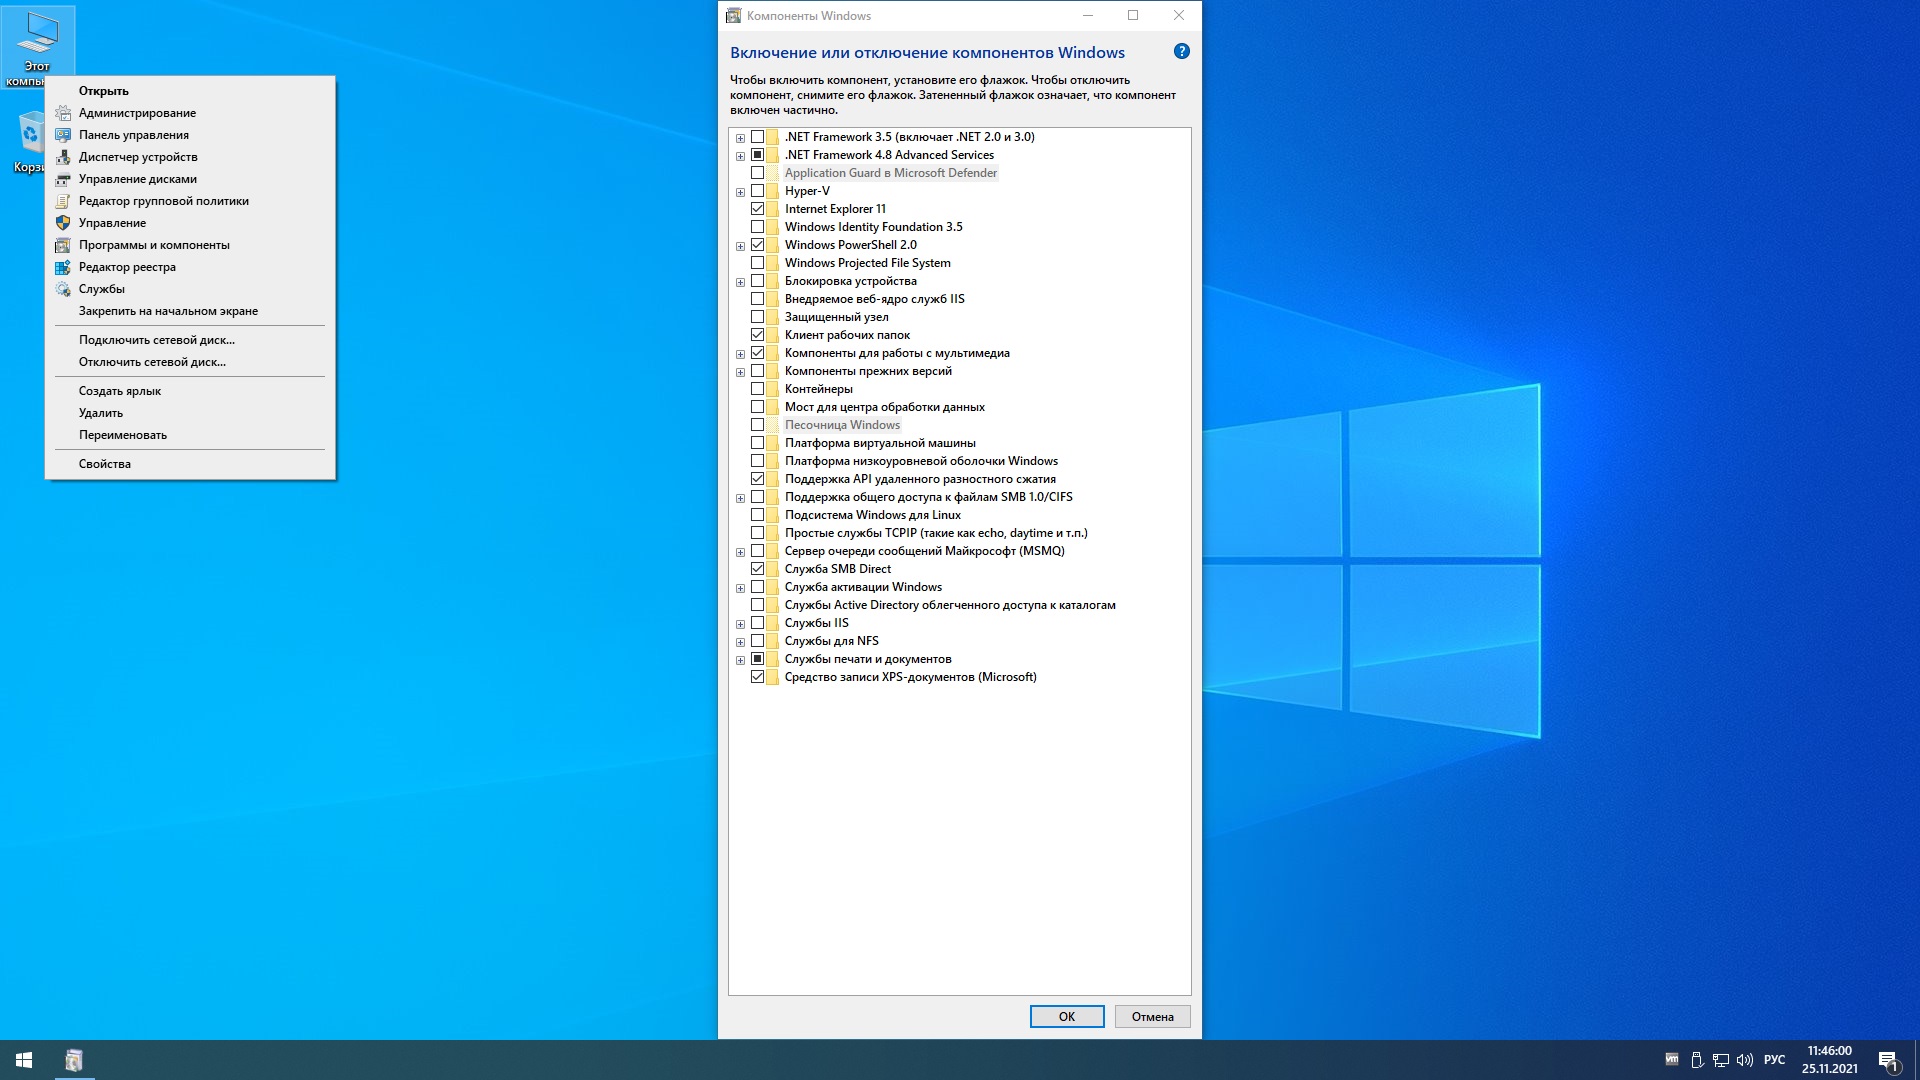 Windows 10 Enterprise LTSC x64 Rus by OneSmiLe [19044.1387]